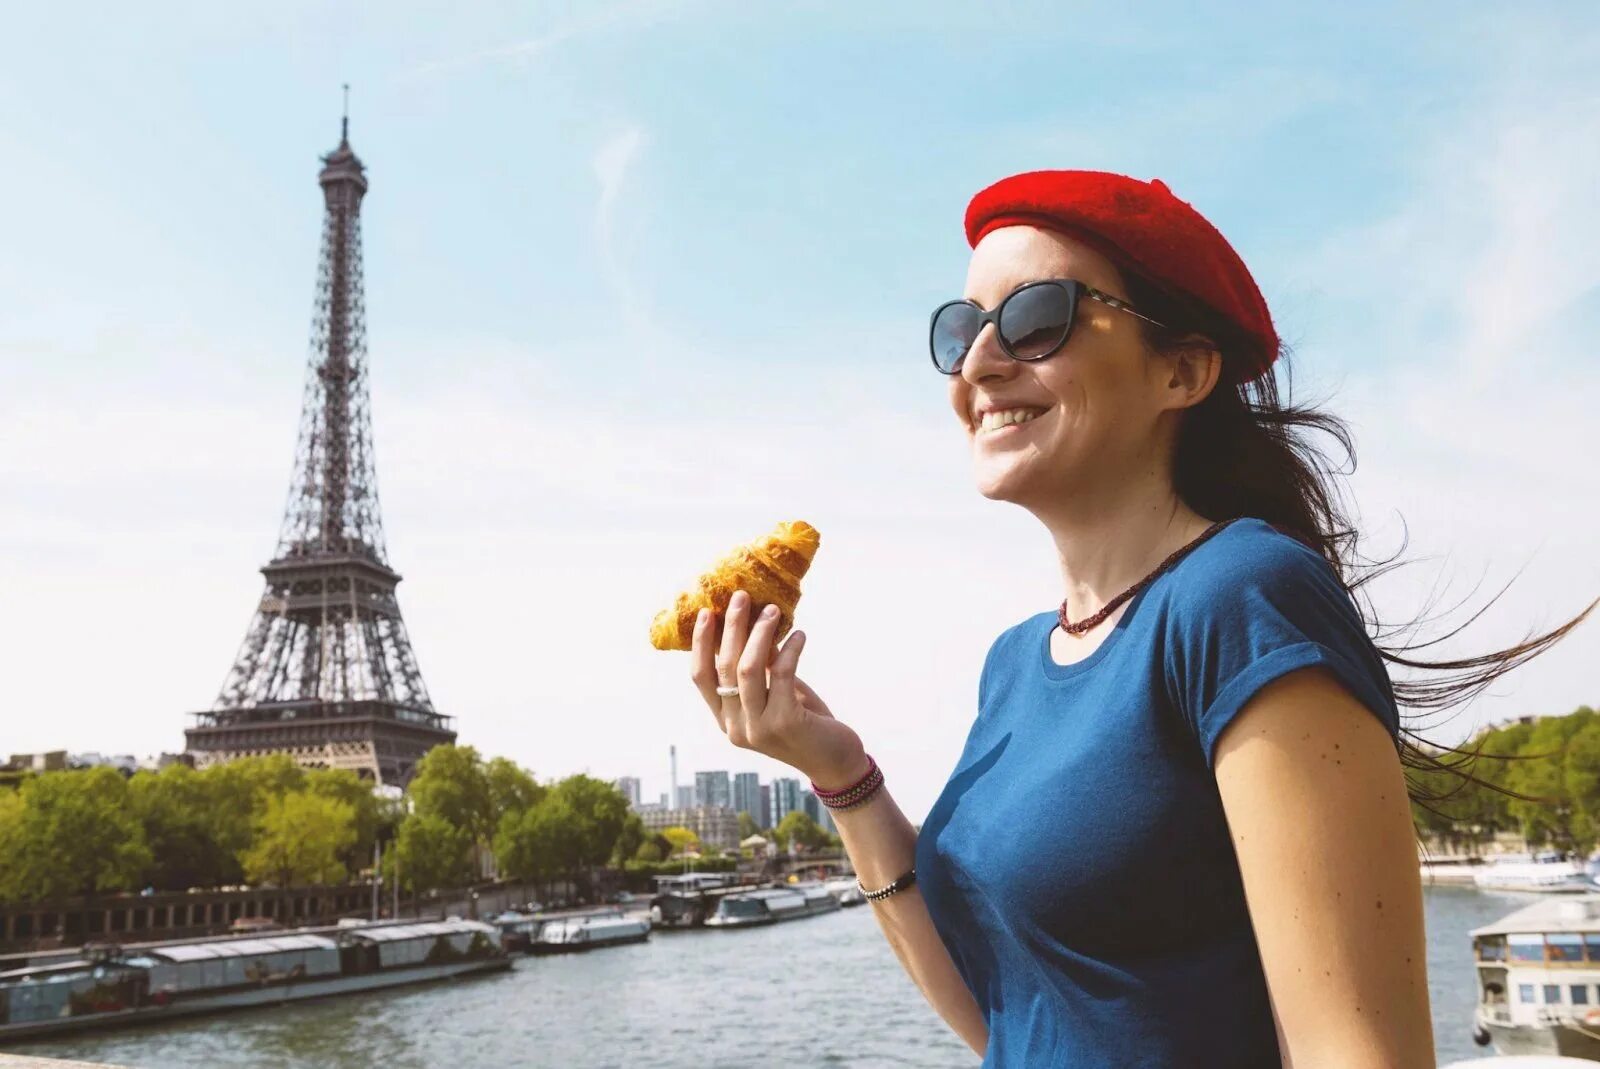 Француз ввести. Франция люди. Француз с багетом на фоне Эйфелевой башни. Девушка с круассаном. Девушка с круассаном в Париже.